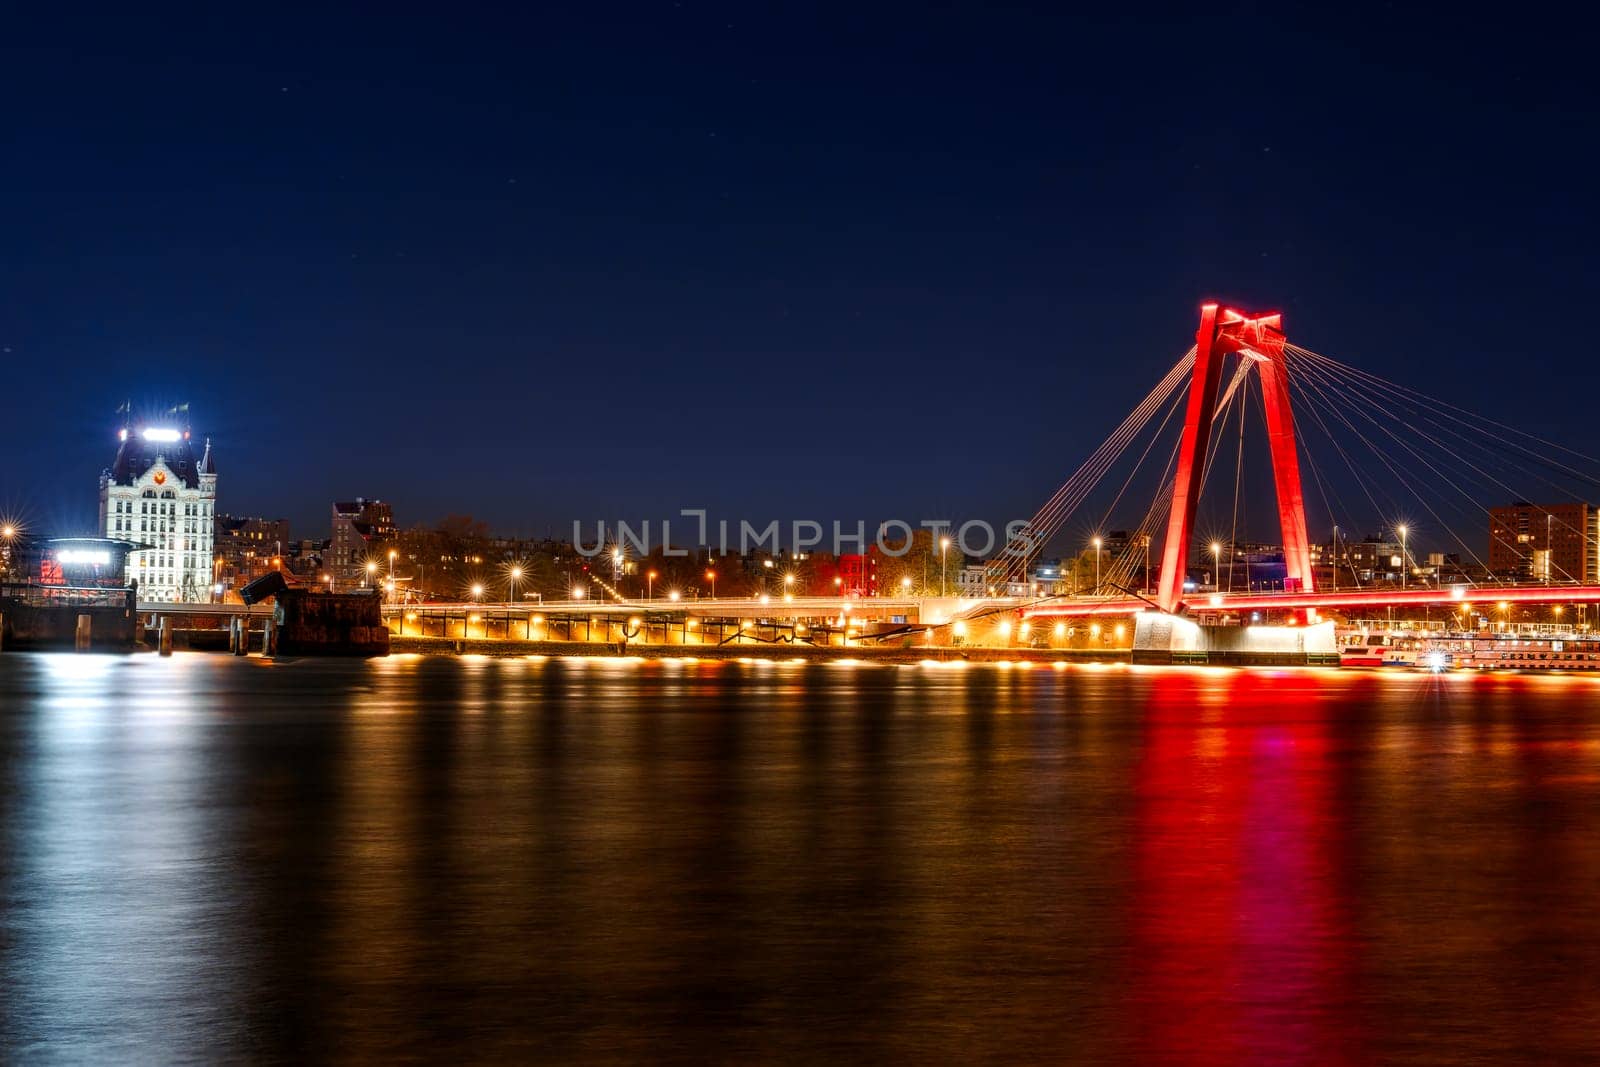 Stunning Long Exposure Night Photo of Willemsbrug Bridge in Rotterdam by PhotoTime